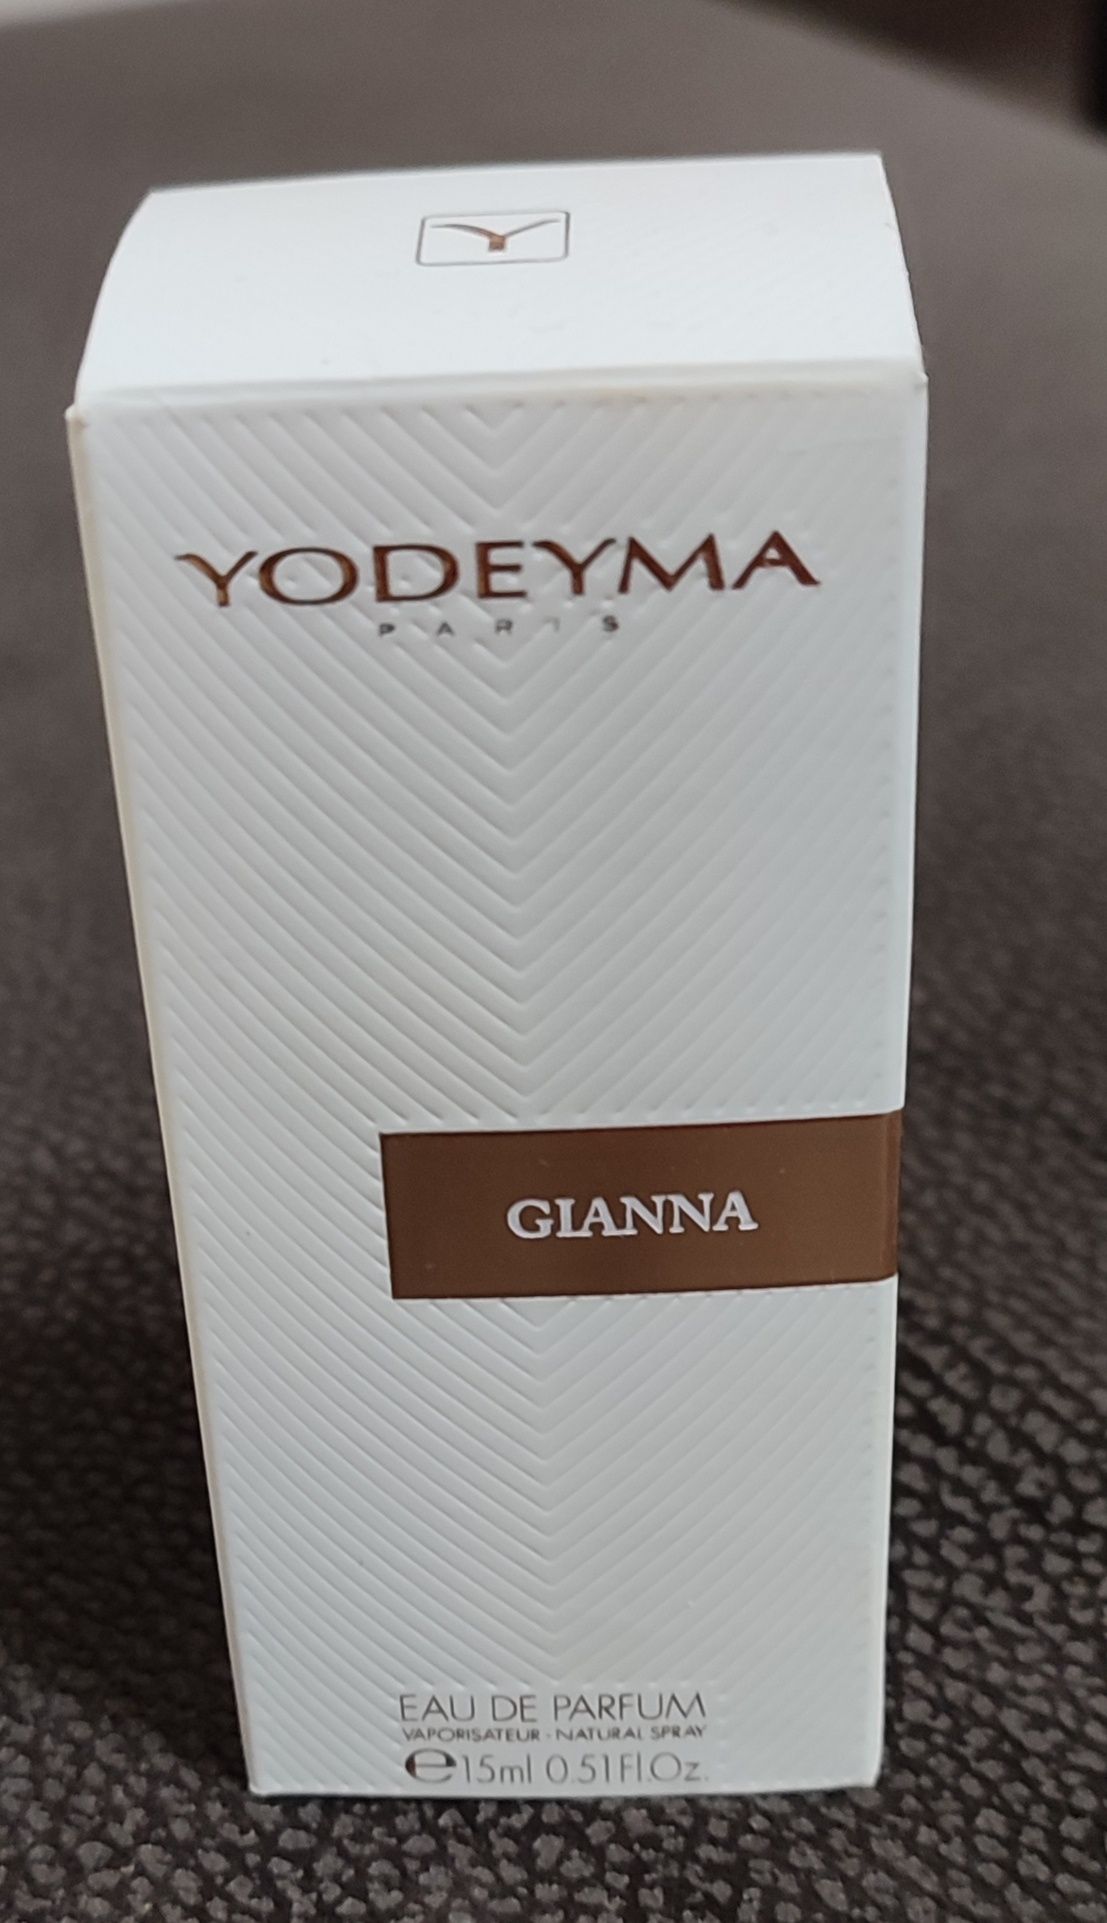 Perfum Yodeyma Gianna 15ml